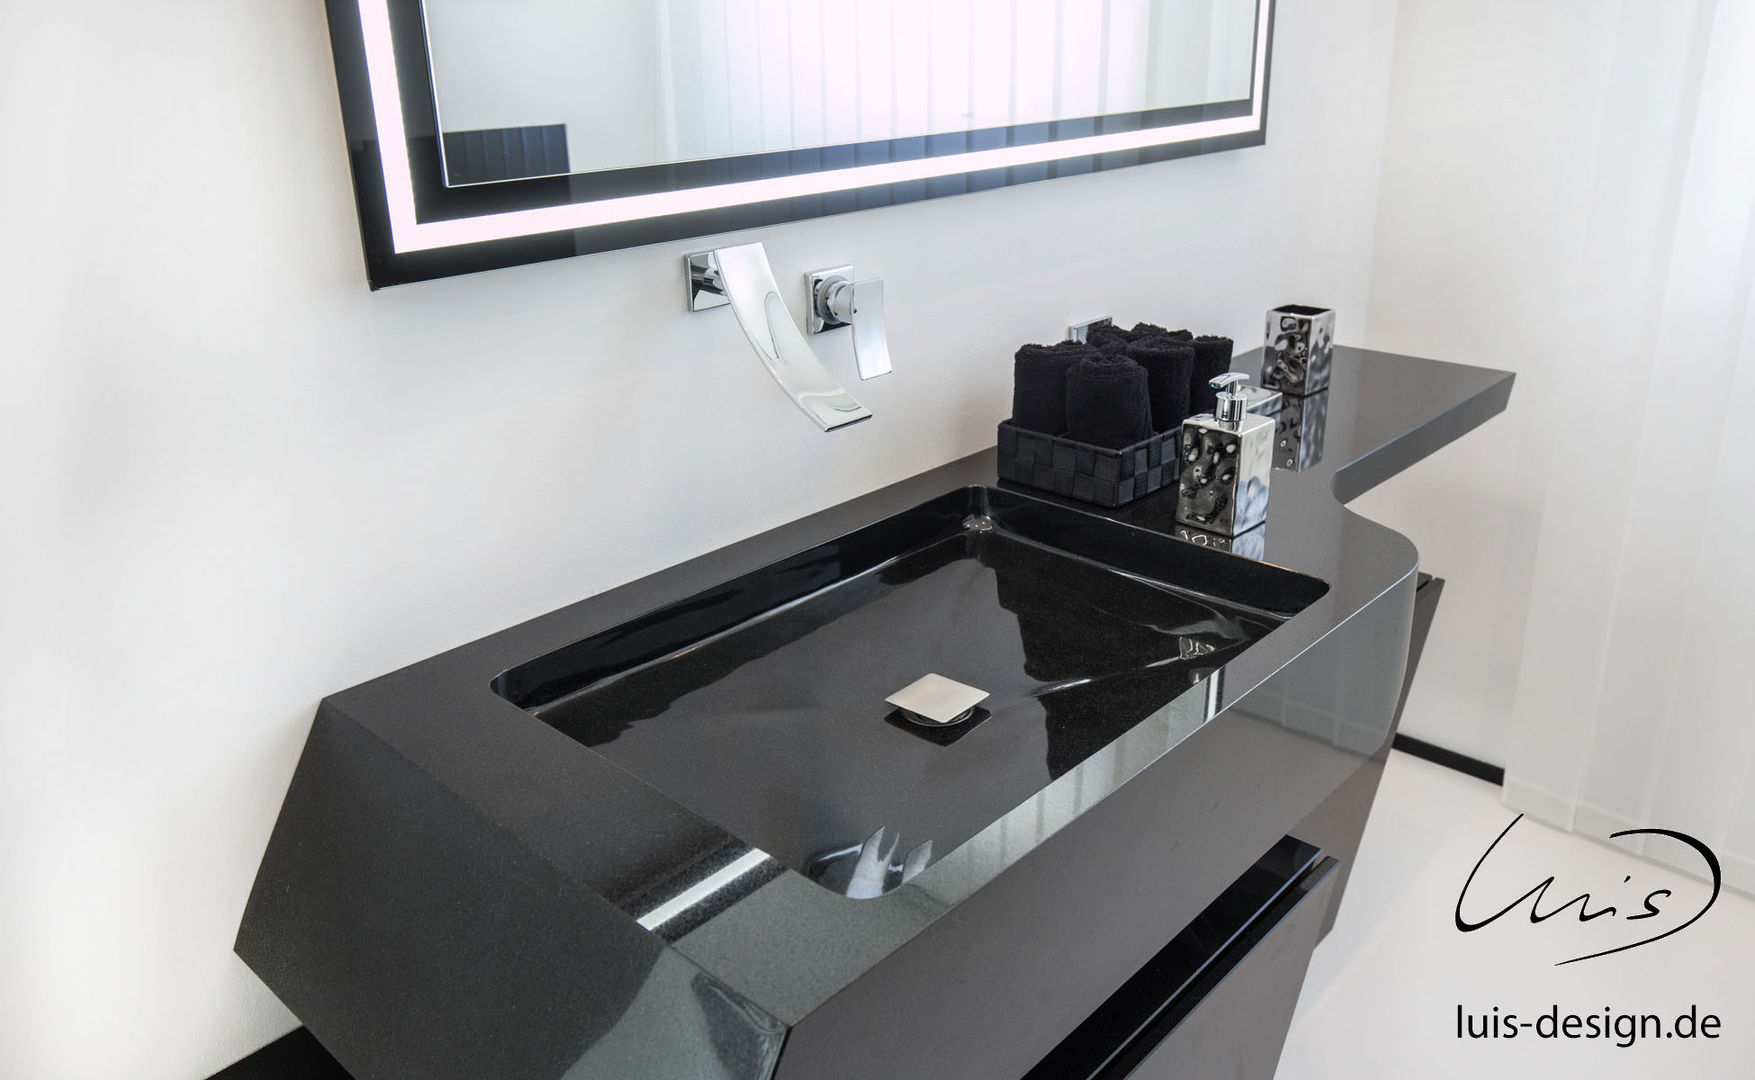 Luxury sink by Luis Design, Luis Design Luis Design Phòng tắm phong cách hiện đại Cục đá Sinks